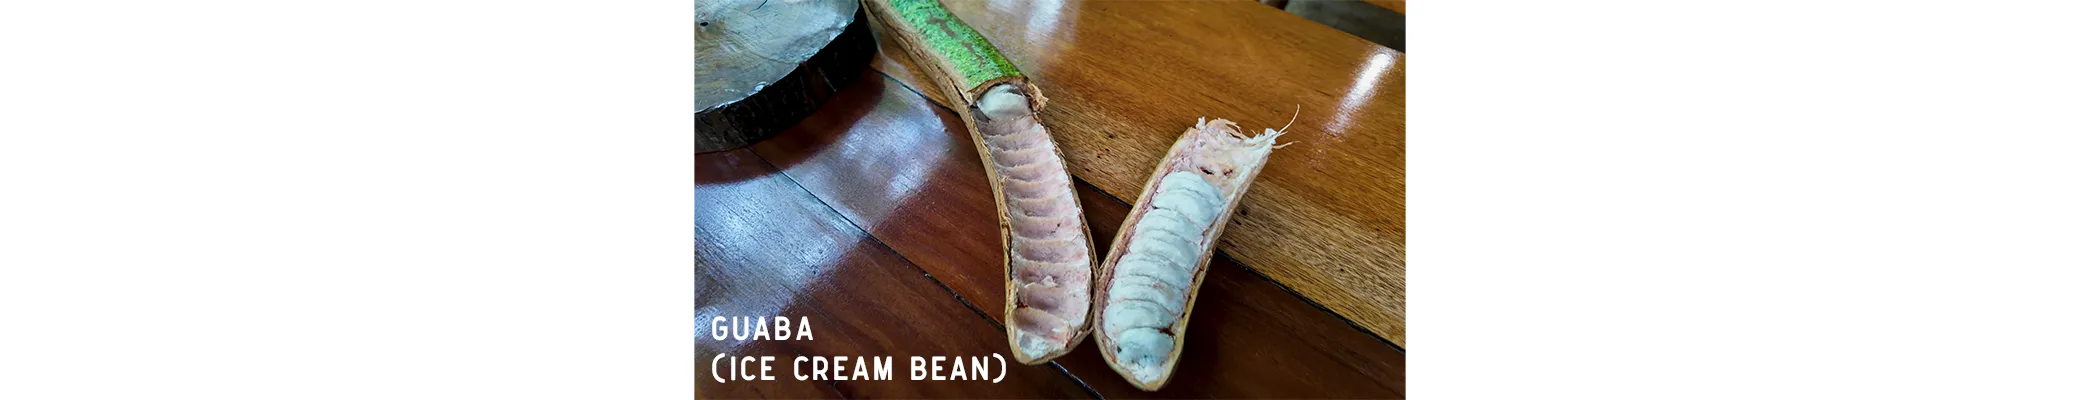 Guaba - The Ice Cream Bean